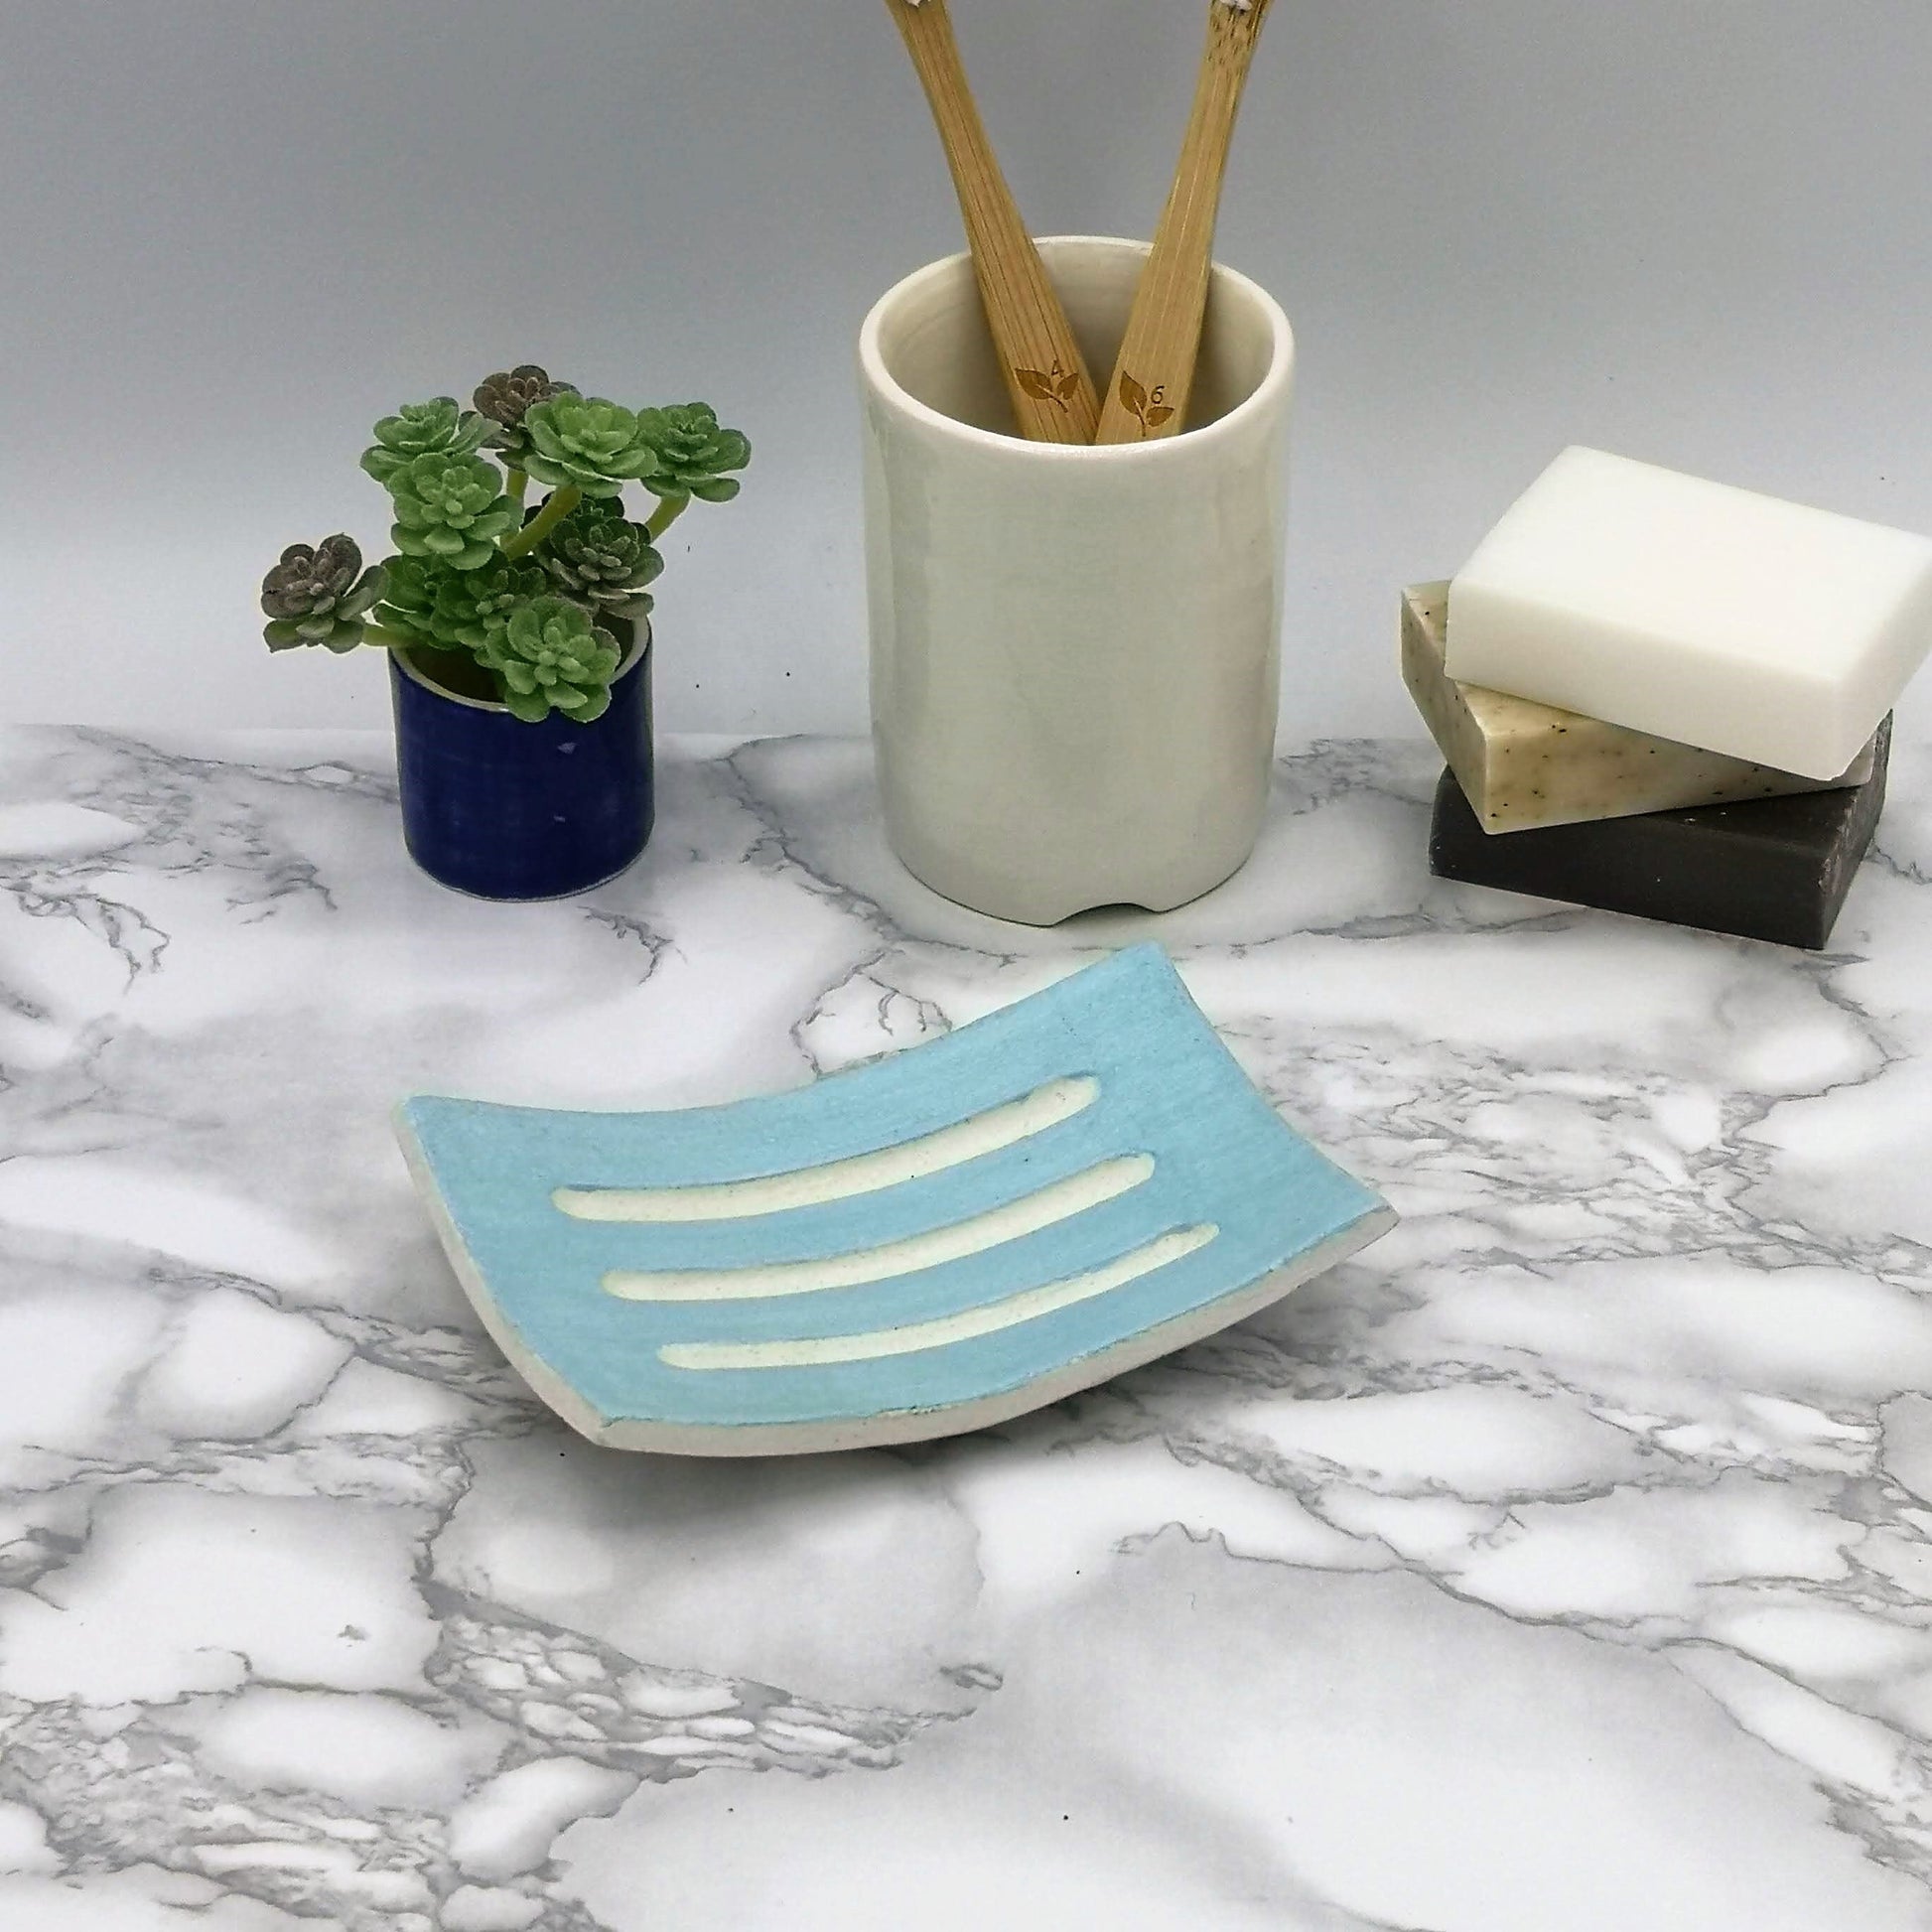 5 Inche Handmade Ceramic Turquoise Blue Rectangle Draining Soap Dish For Bathroom Decor, Soap Bar Holder Dispenser With Drain, Soap Saver - Ceramica Ana Rafael